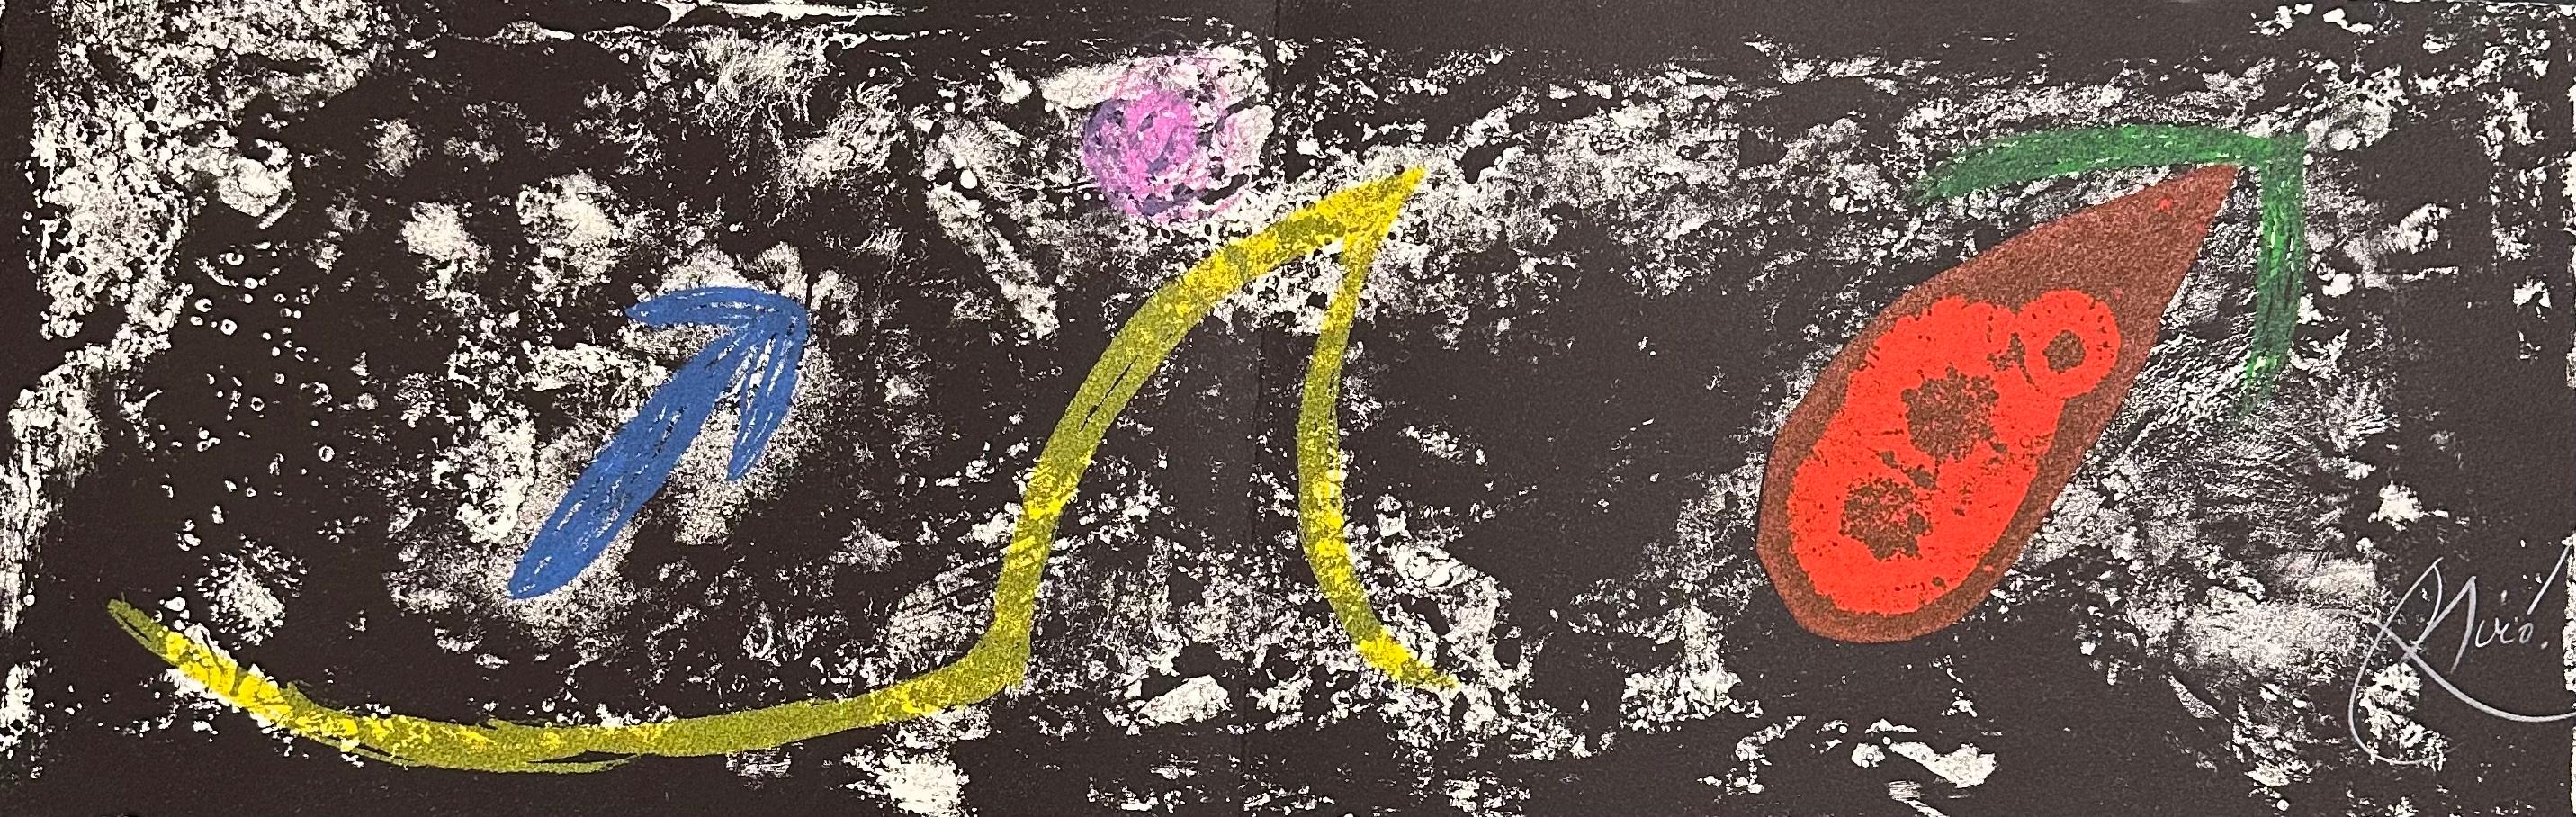 Joan Miró
M.985 from " Les Pénaltiés de l'enfer ou les Nouvelles-Hébrides"
1974
Hand signed 
From a signed edition of 50, numbered EA/50
Mourlot 985
10.5 x 29.5 inches (Horizontal)
*Unframed